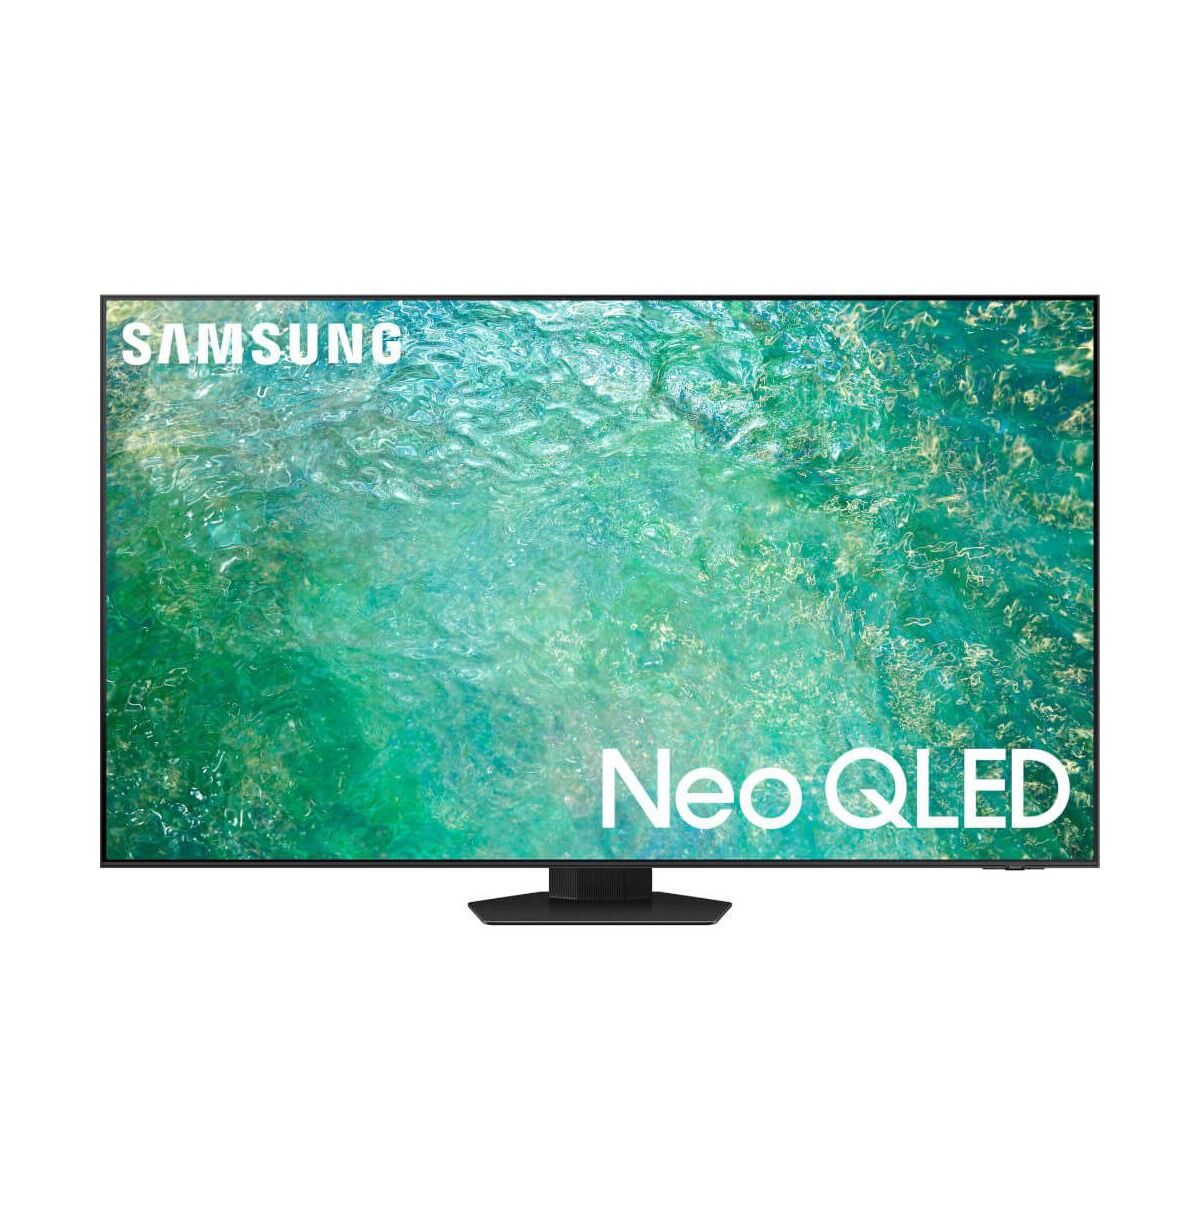 Samsung 55 inch Class Neo Qled 4K Smart Tv - Black